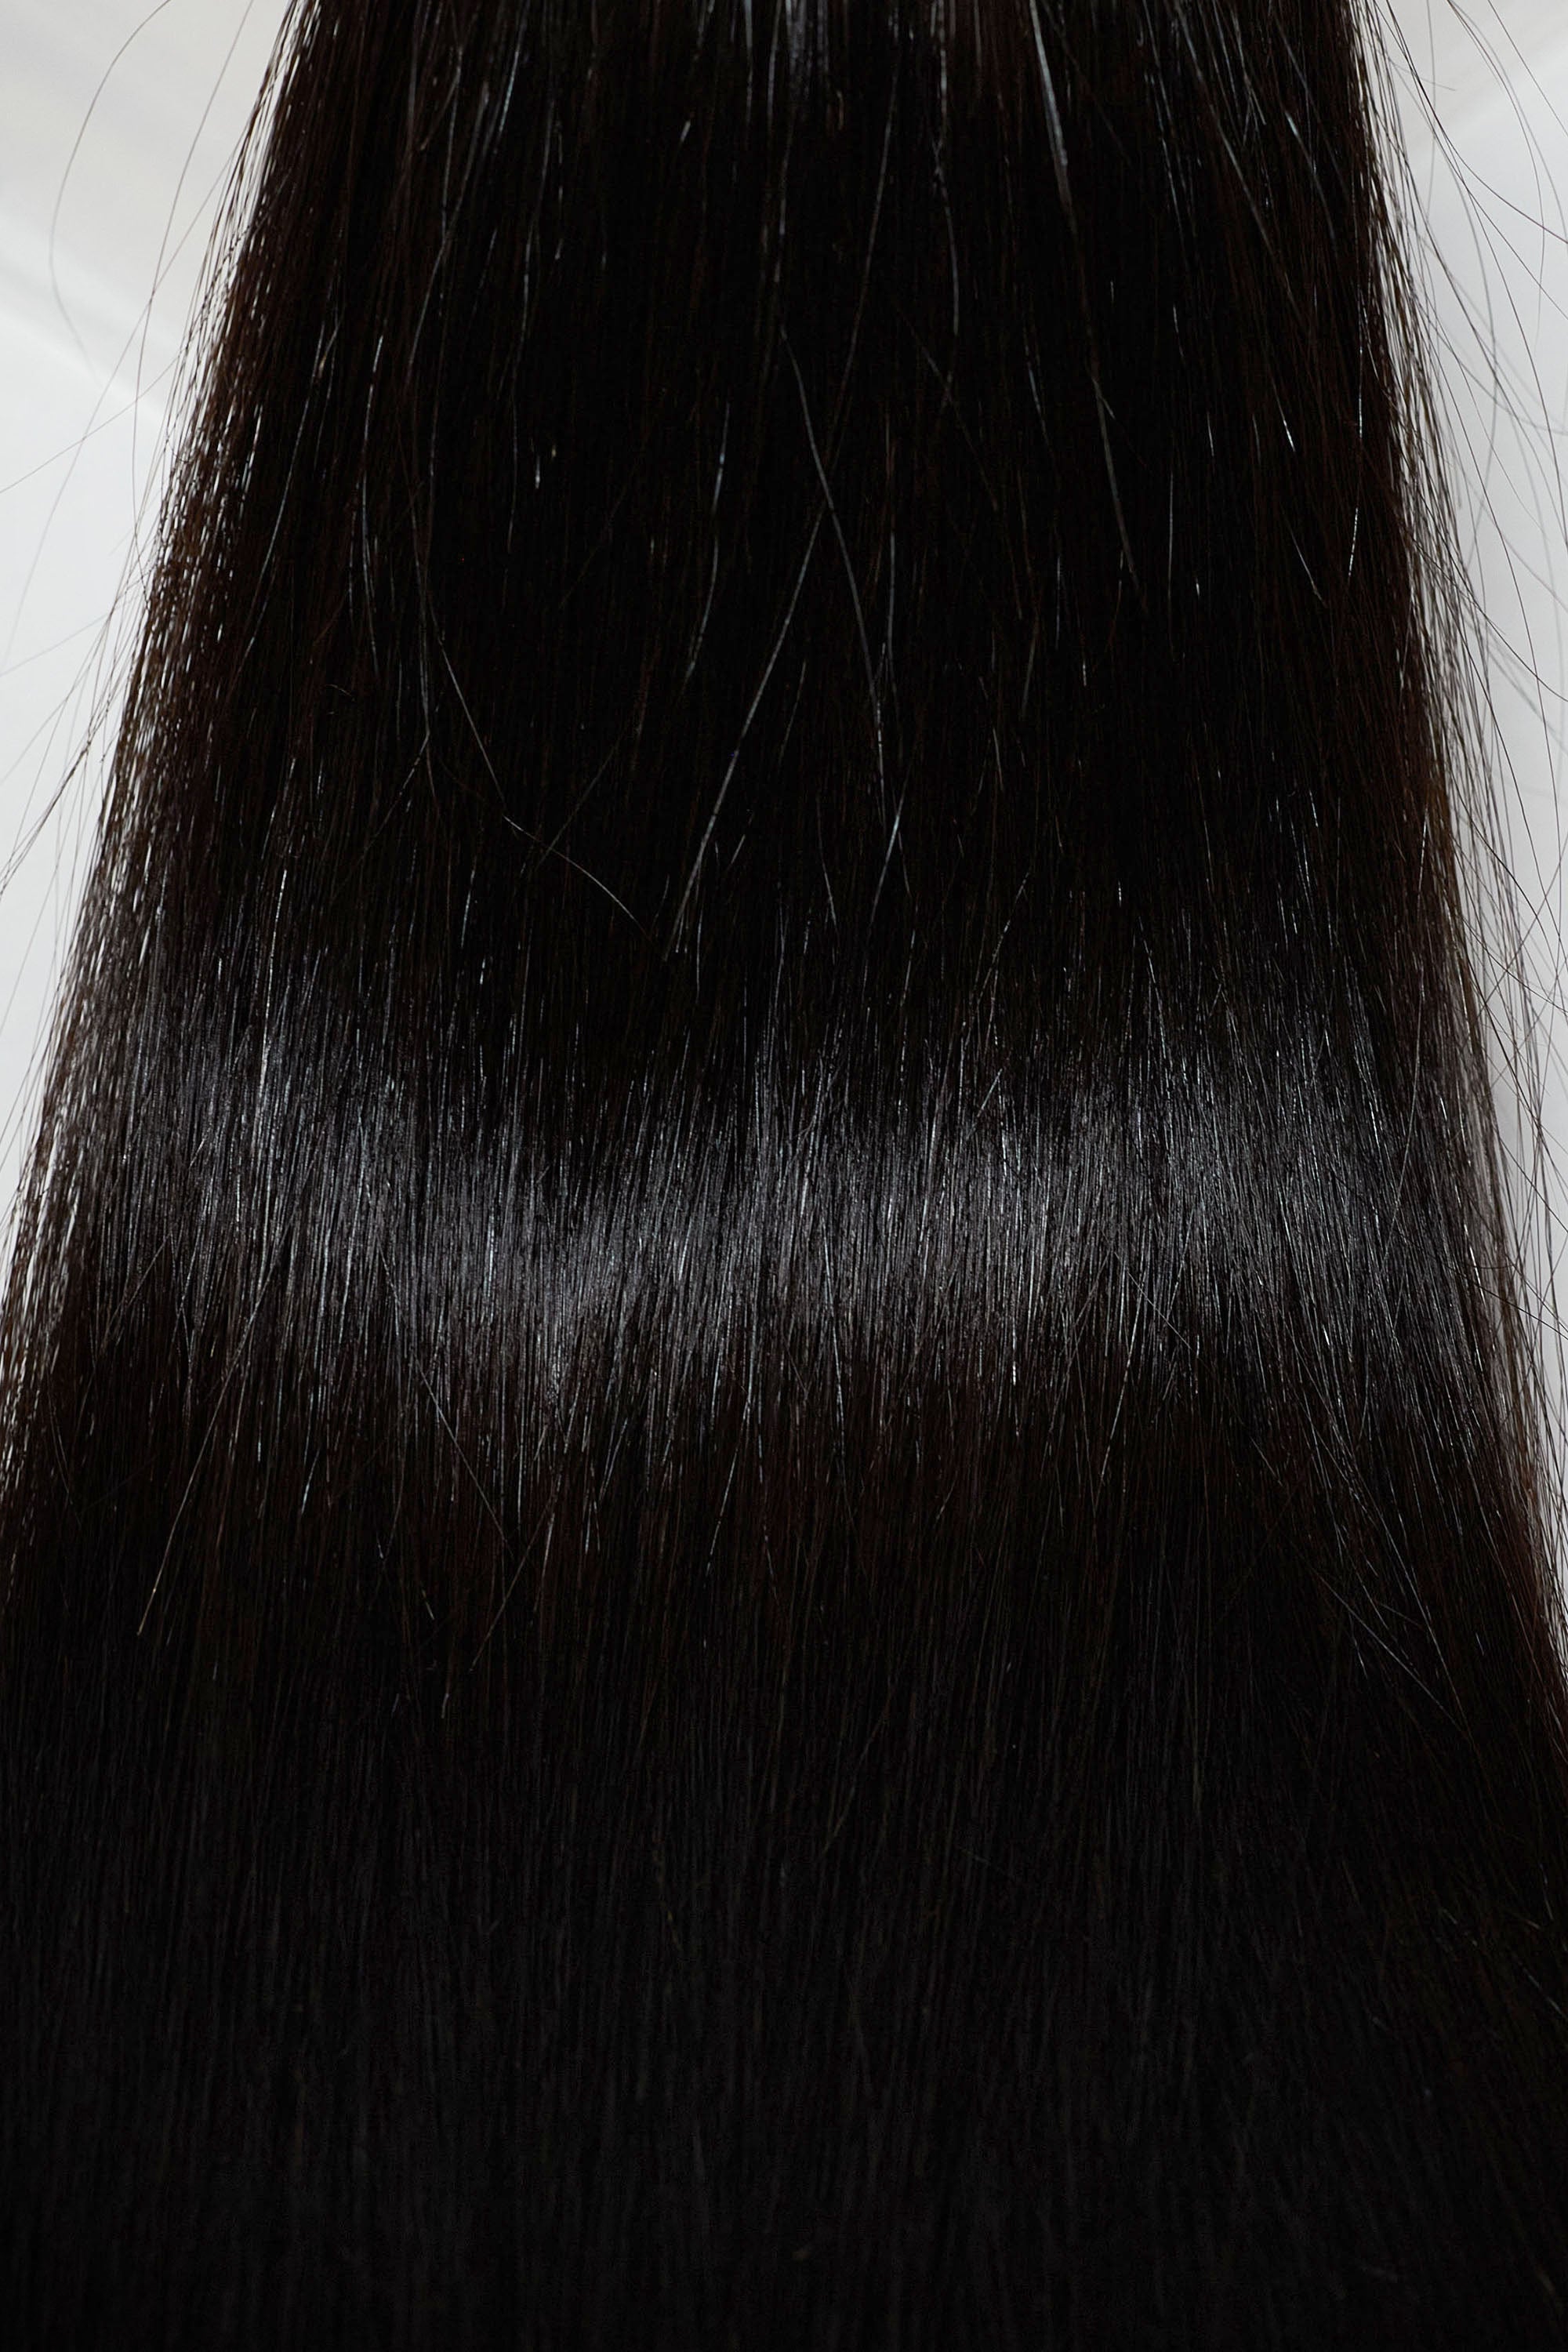 Behair professional Keratin Tip "Premium" 22" (55cm) Natural Straight Jet Black #1 - 25g (Standart - 0.7g each pcs) hair extensions